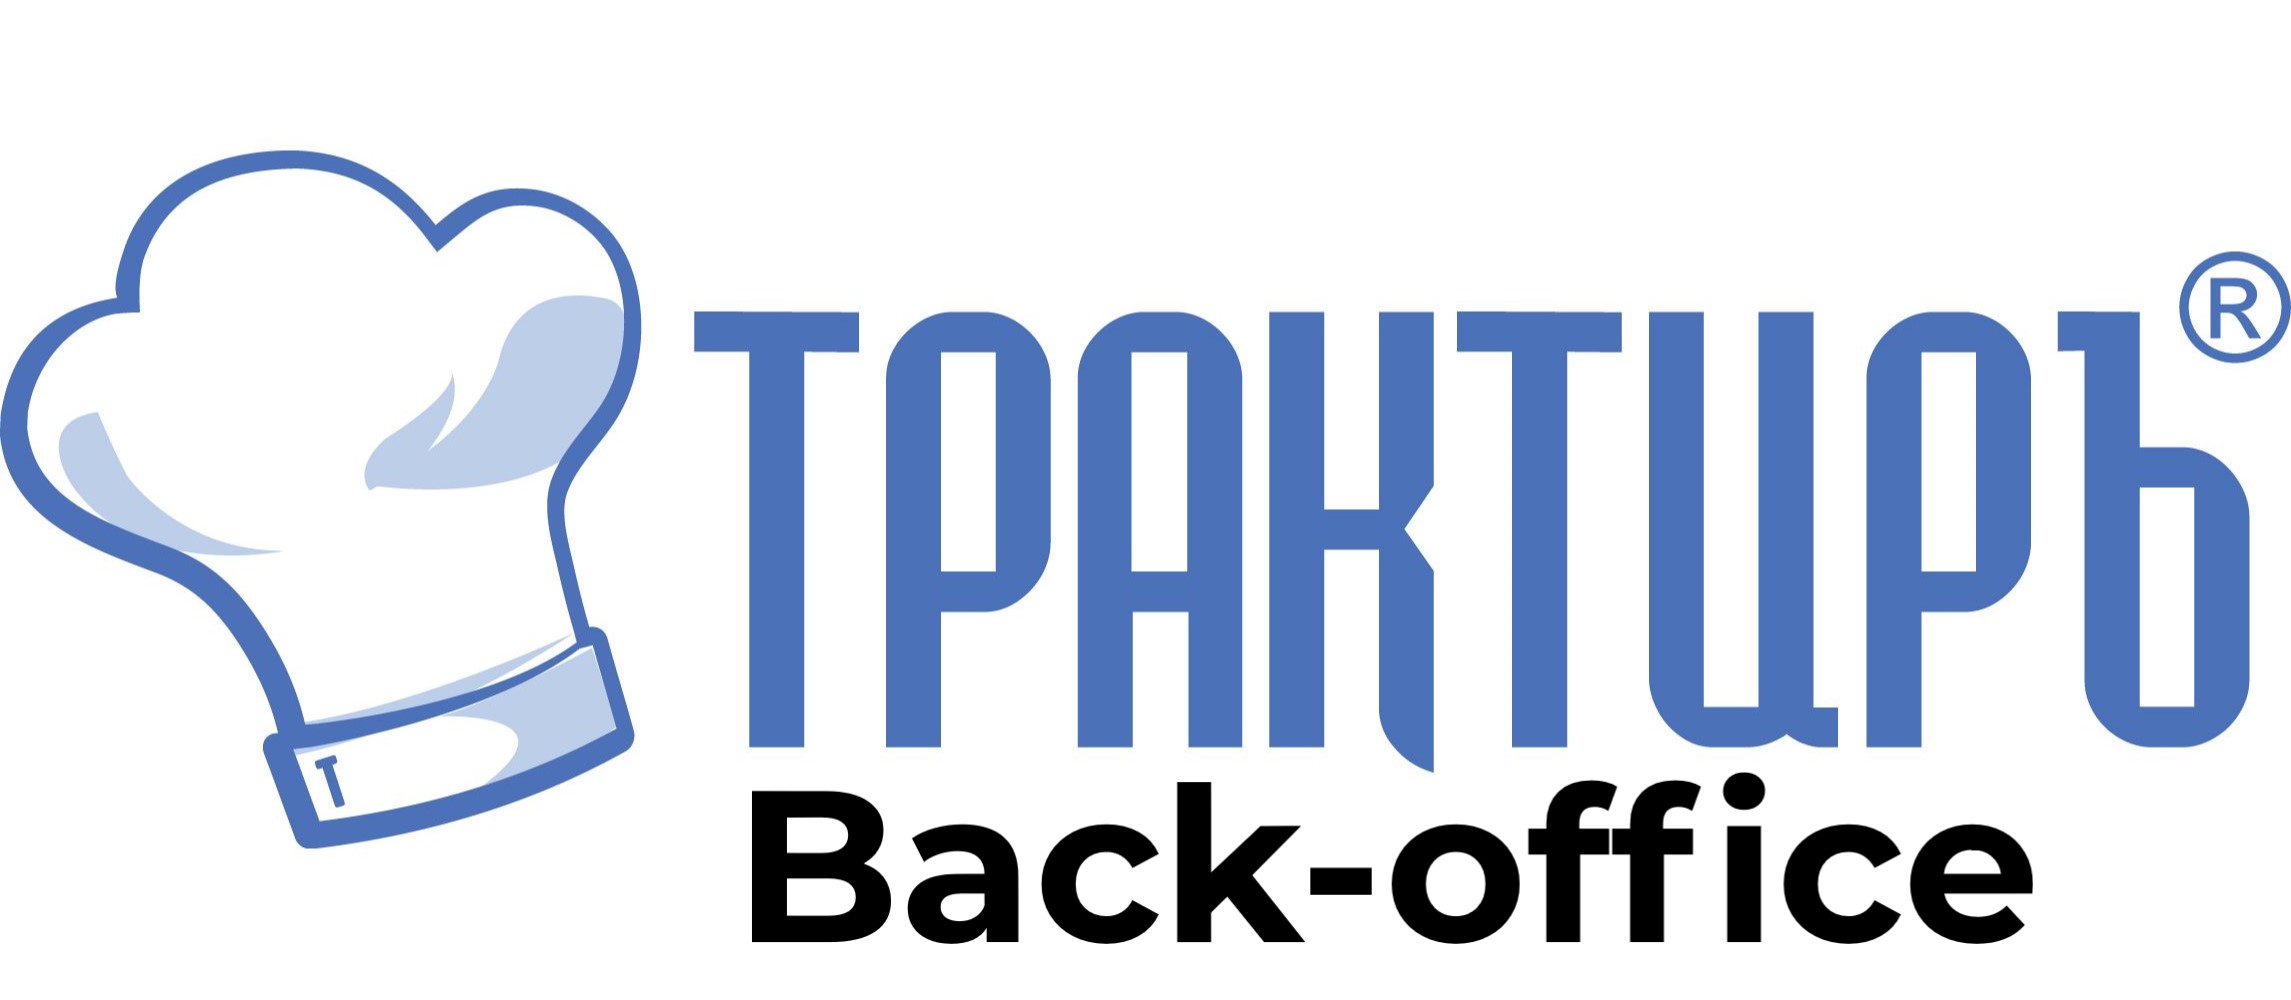 Трактиръ Back-Office ПРОФ, ред. 3.0 Основная поставка в Хабаровске